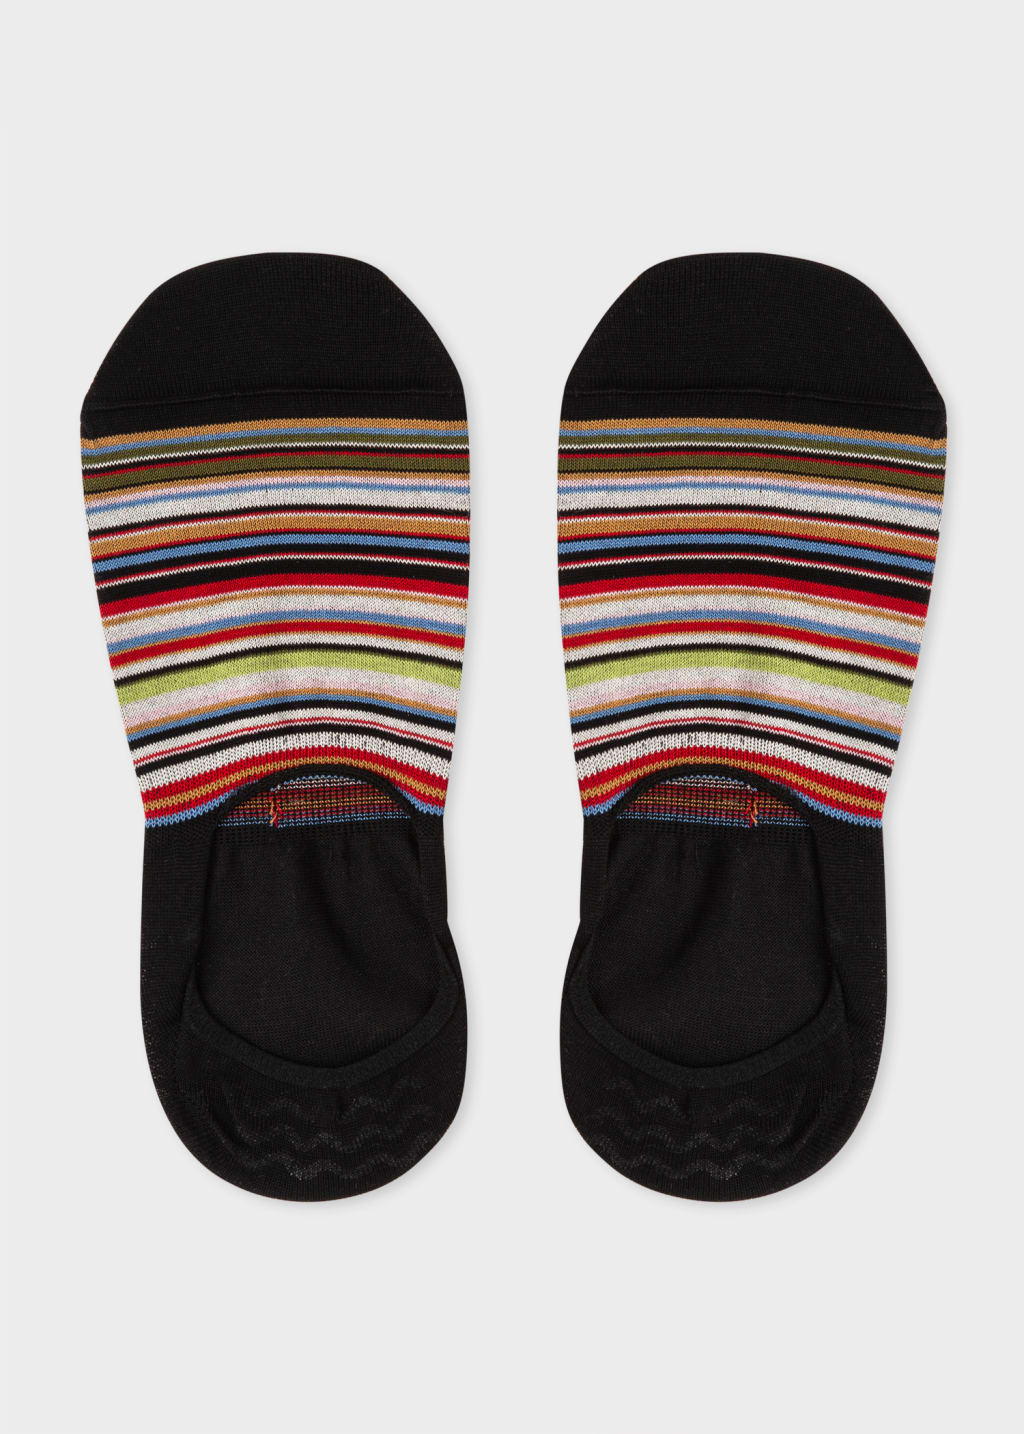 Pair View - Black 'Signature Stripe' Loafer Socks Paul Smith